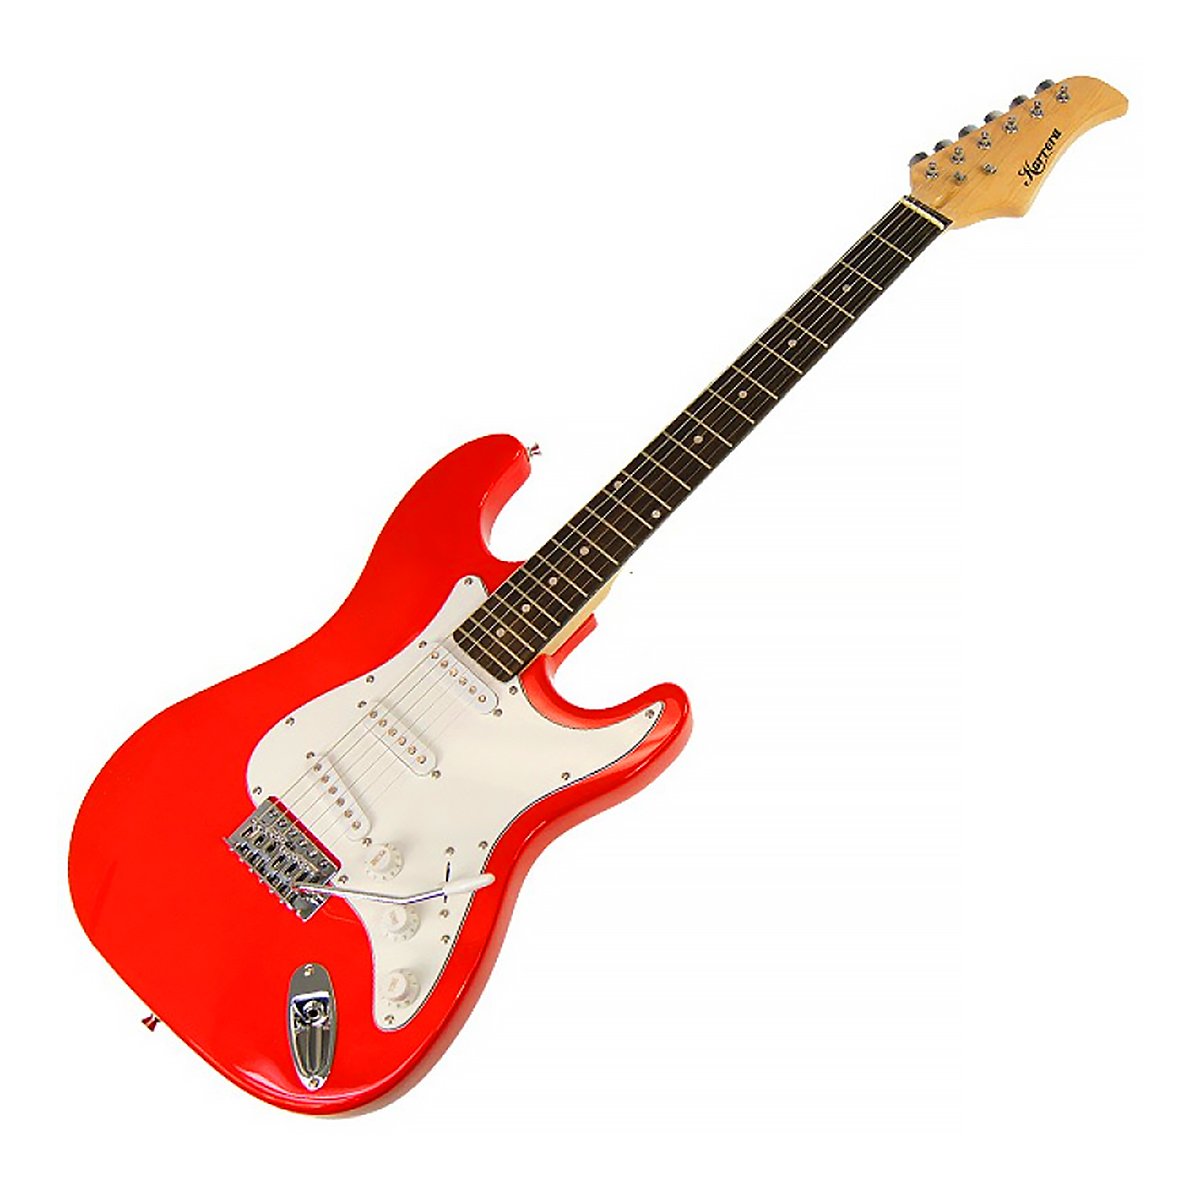 Karrera 39in Electric Guitar - Red 1